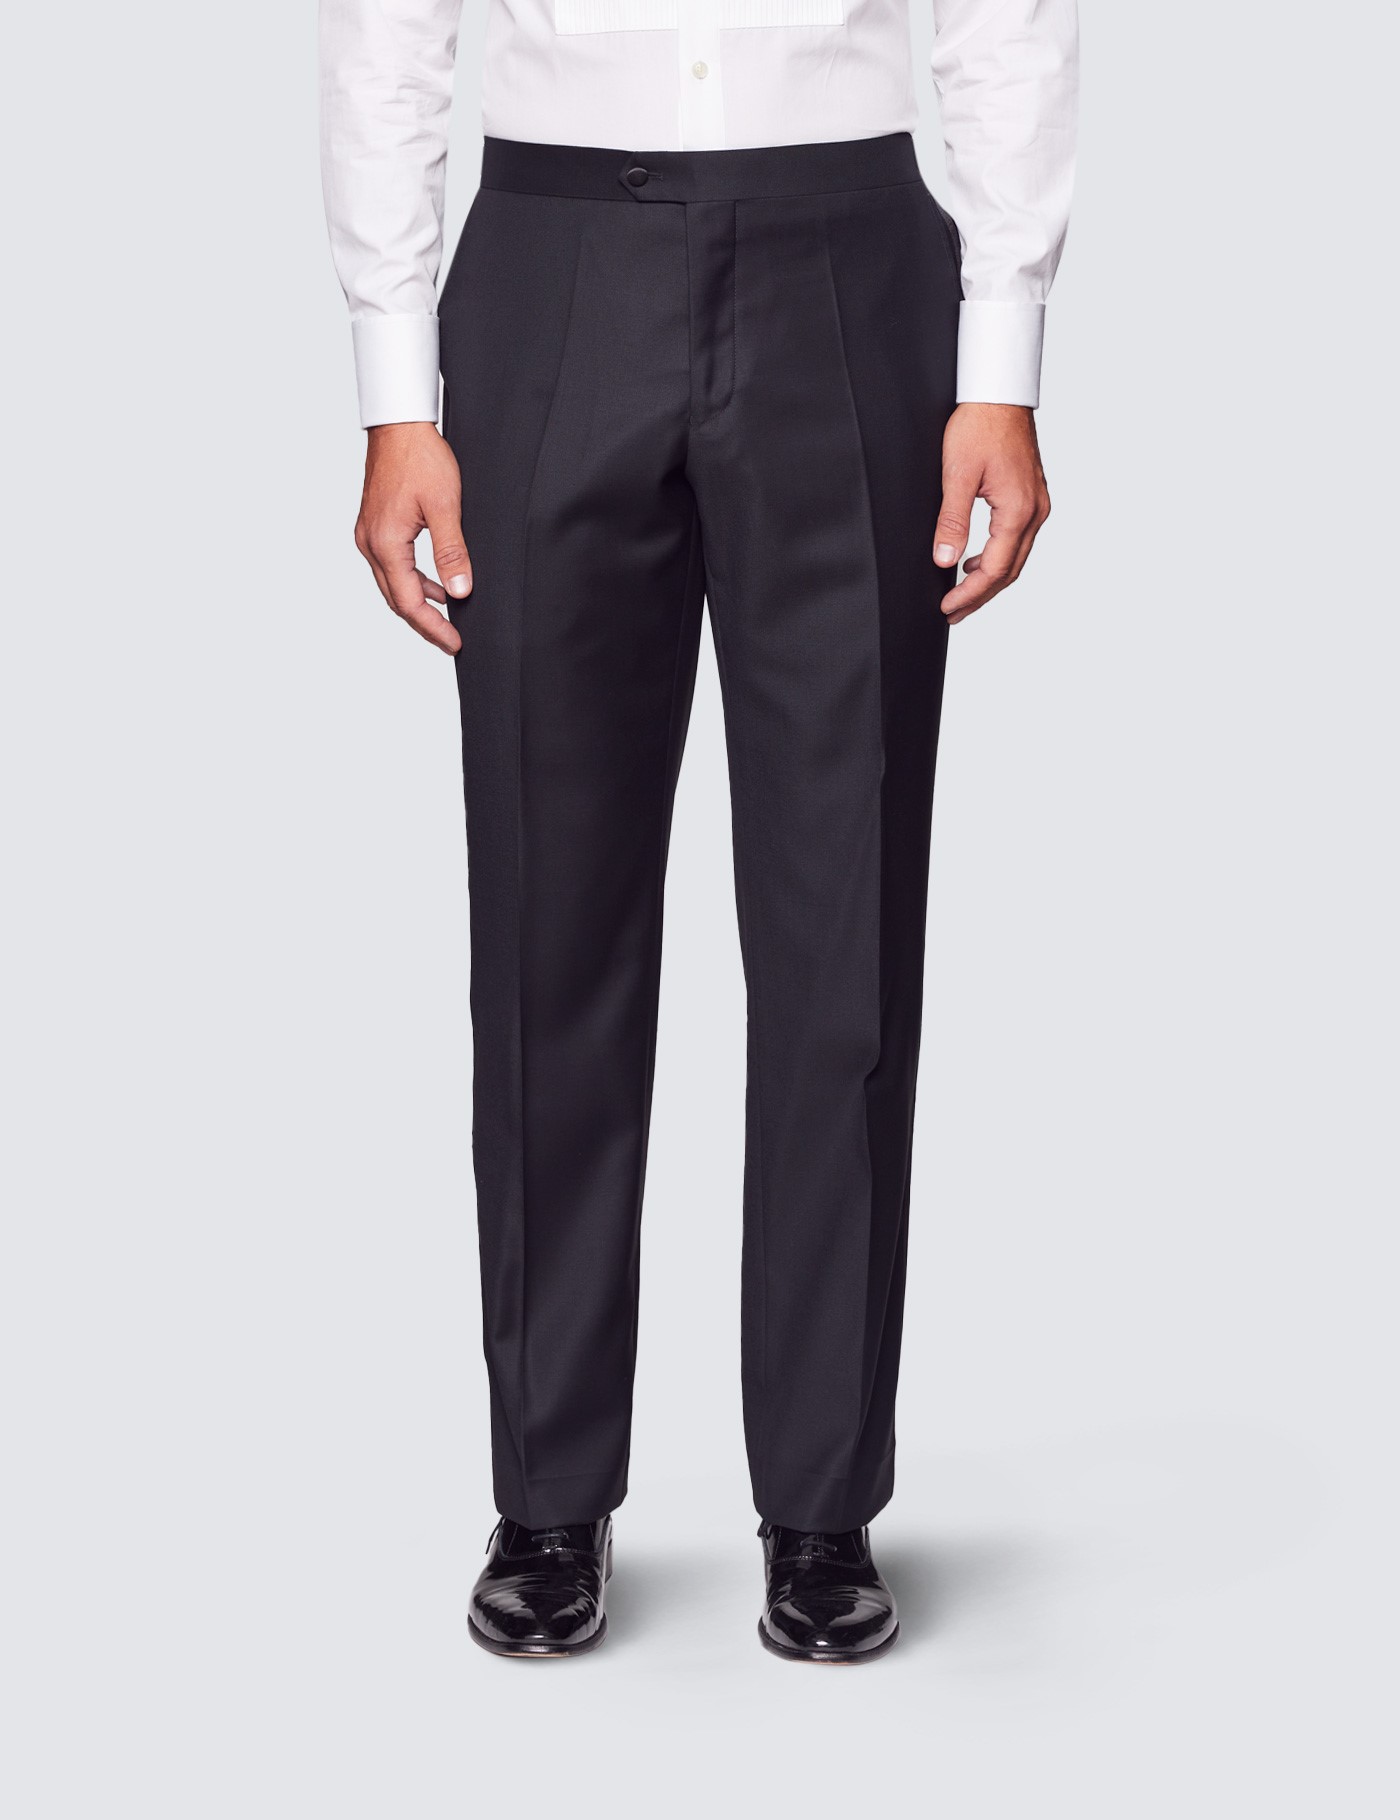 Men’s Black Classic Fit Dinner Suit Trousers| Hawes & Curtis